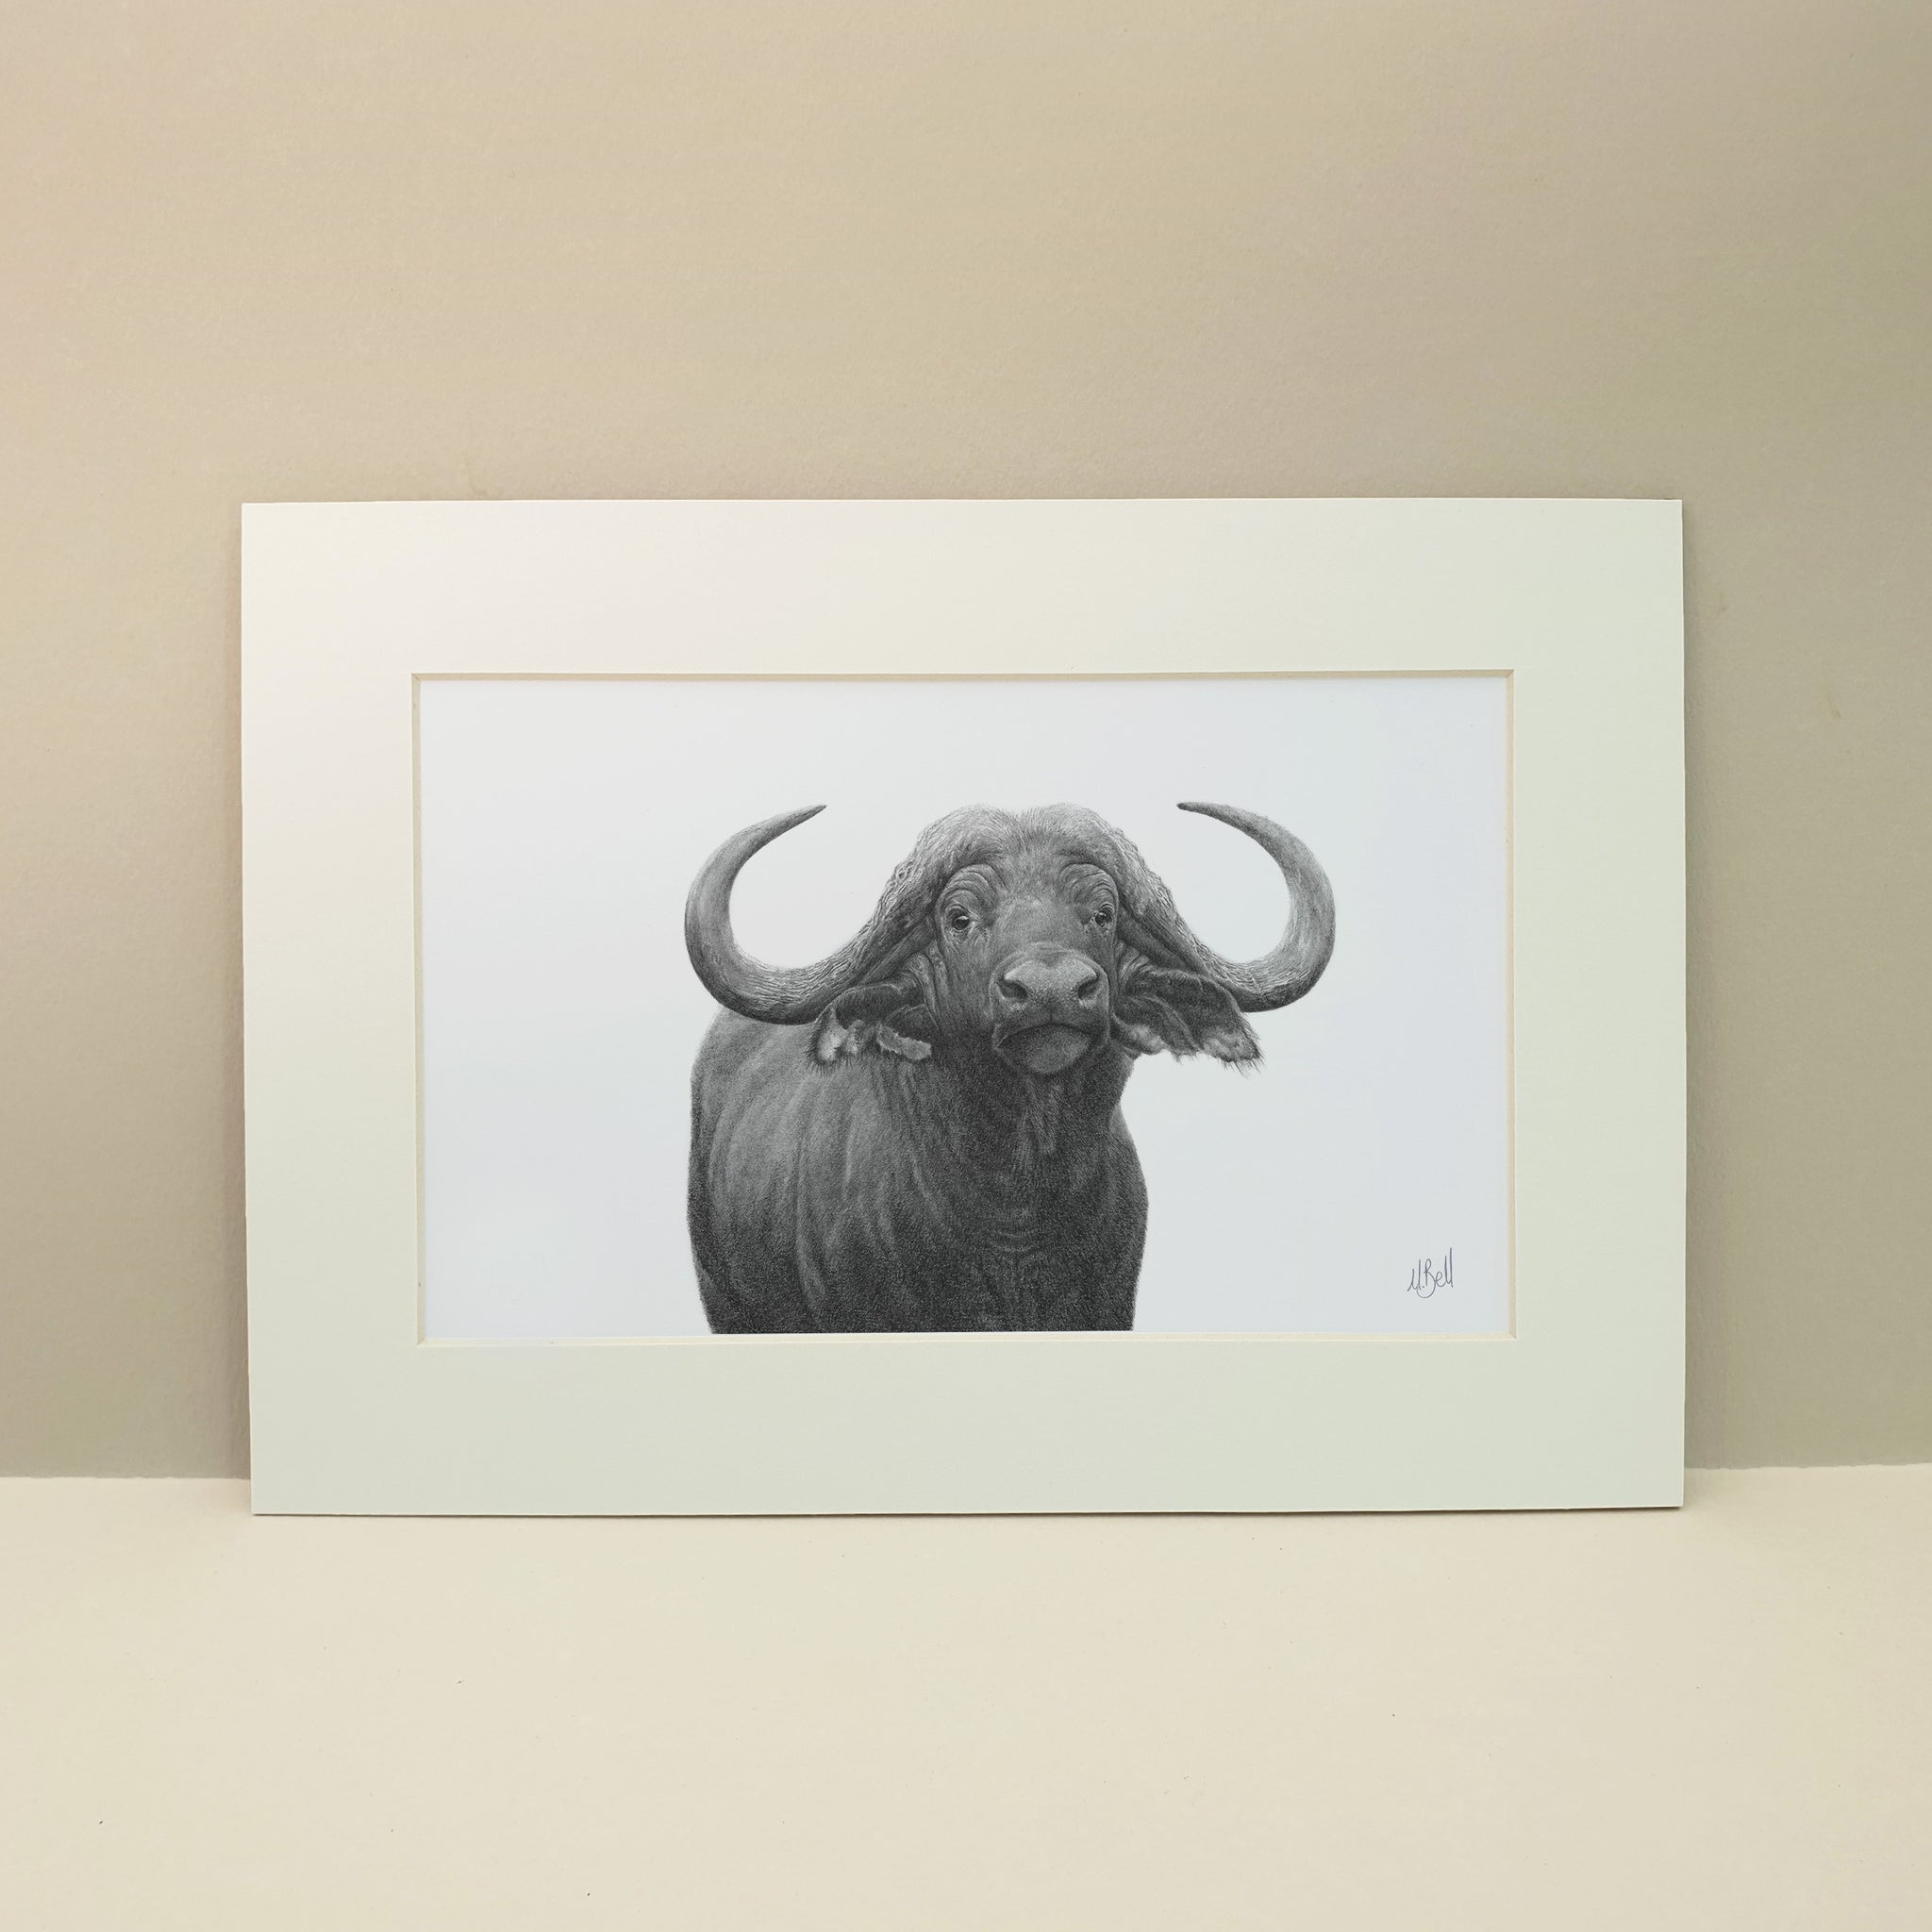 Buffalo Bull portrait